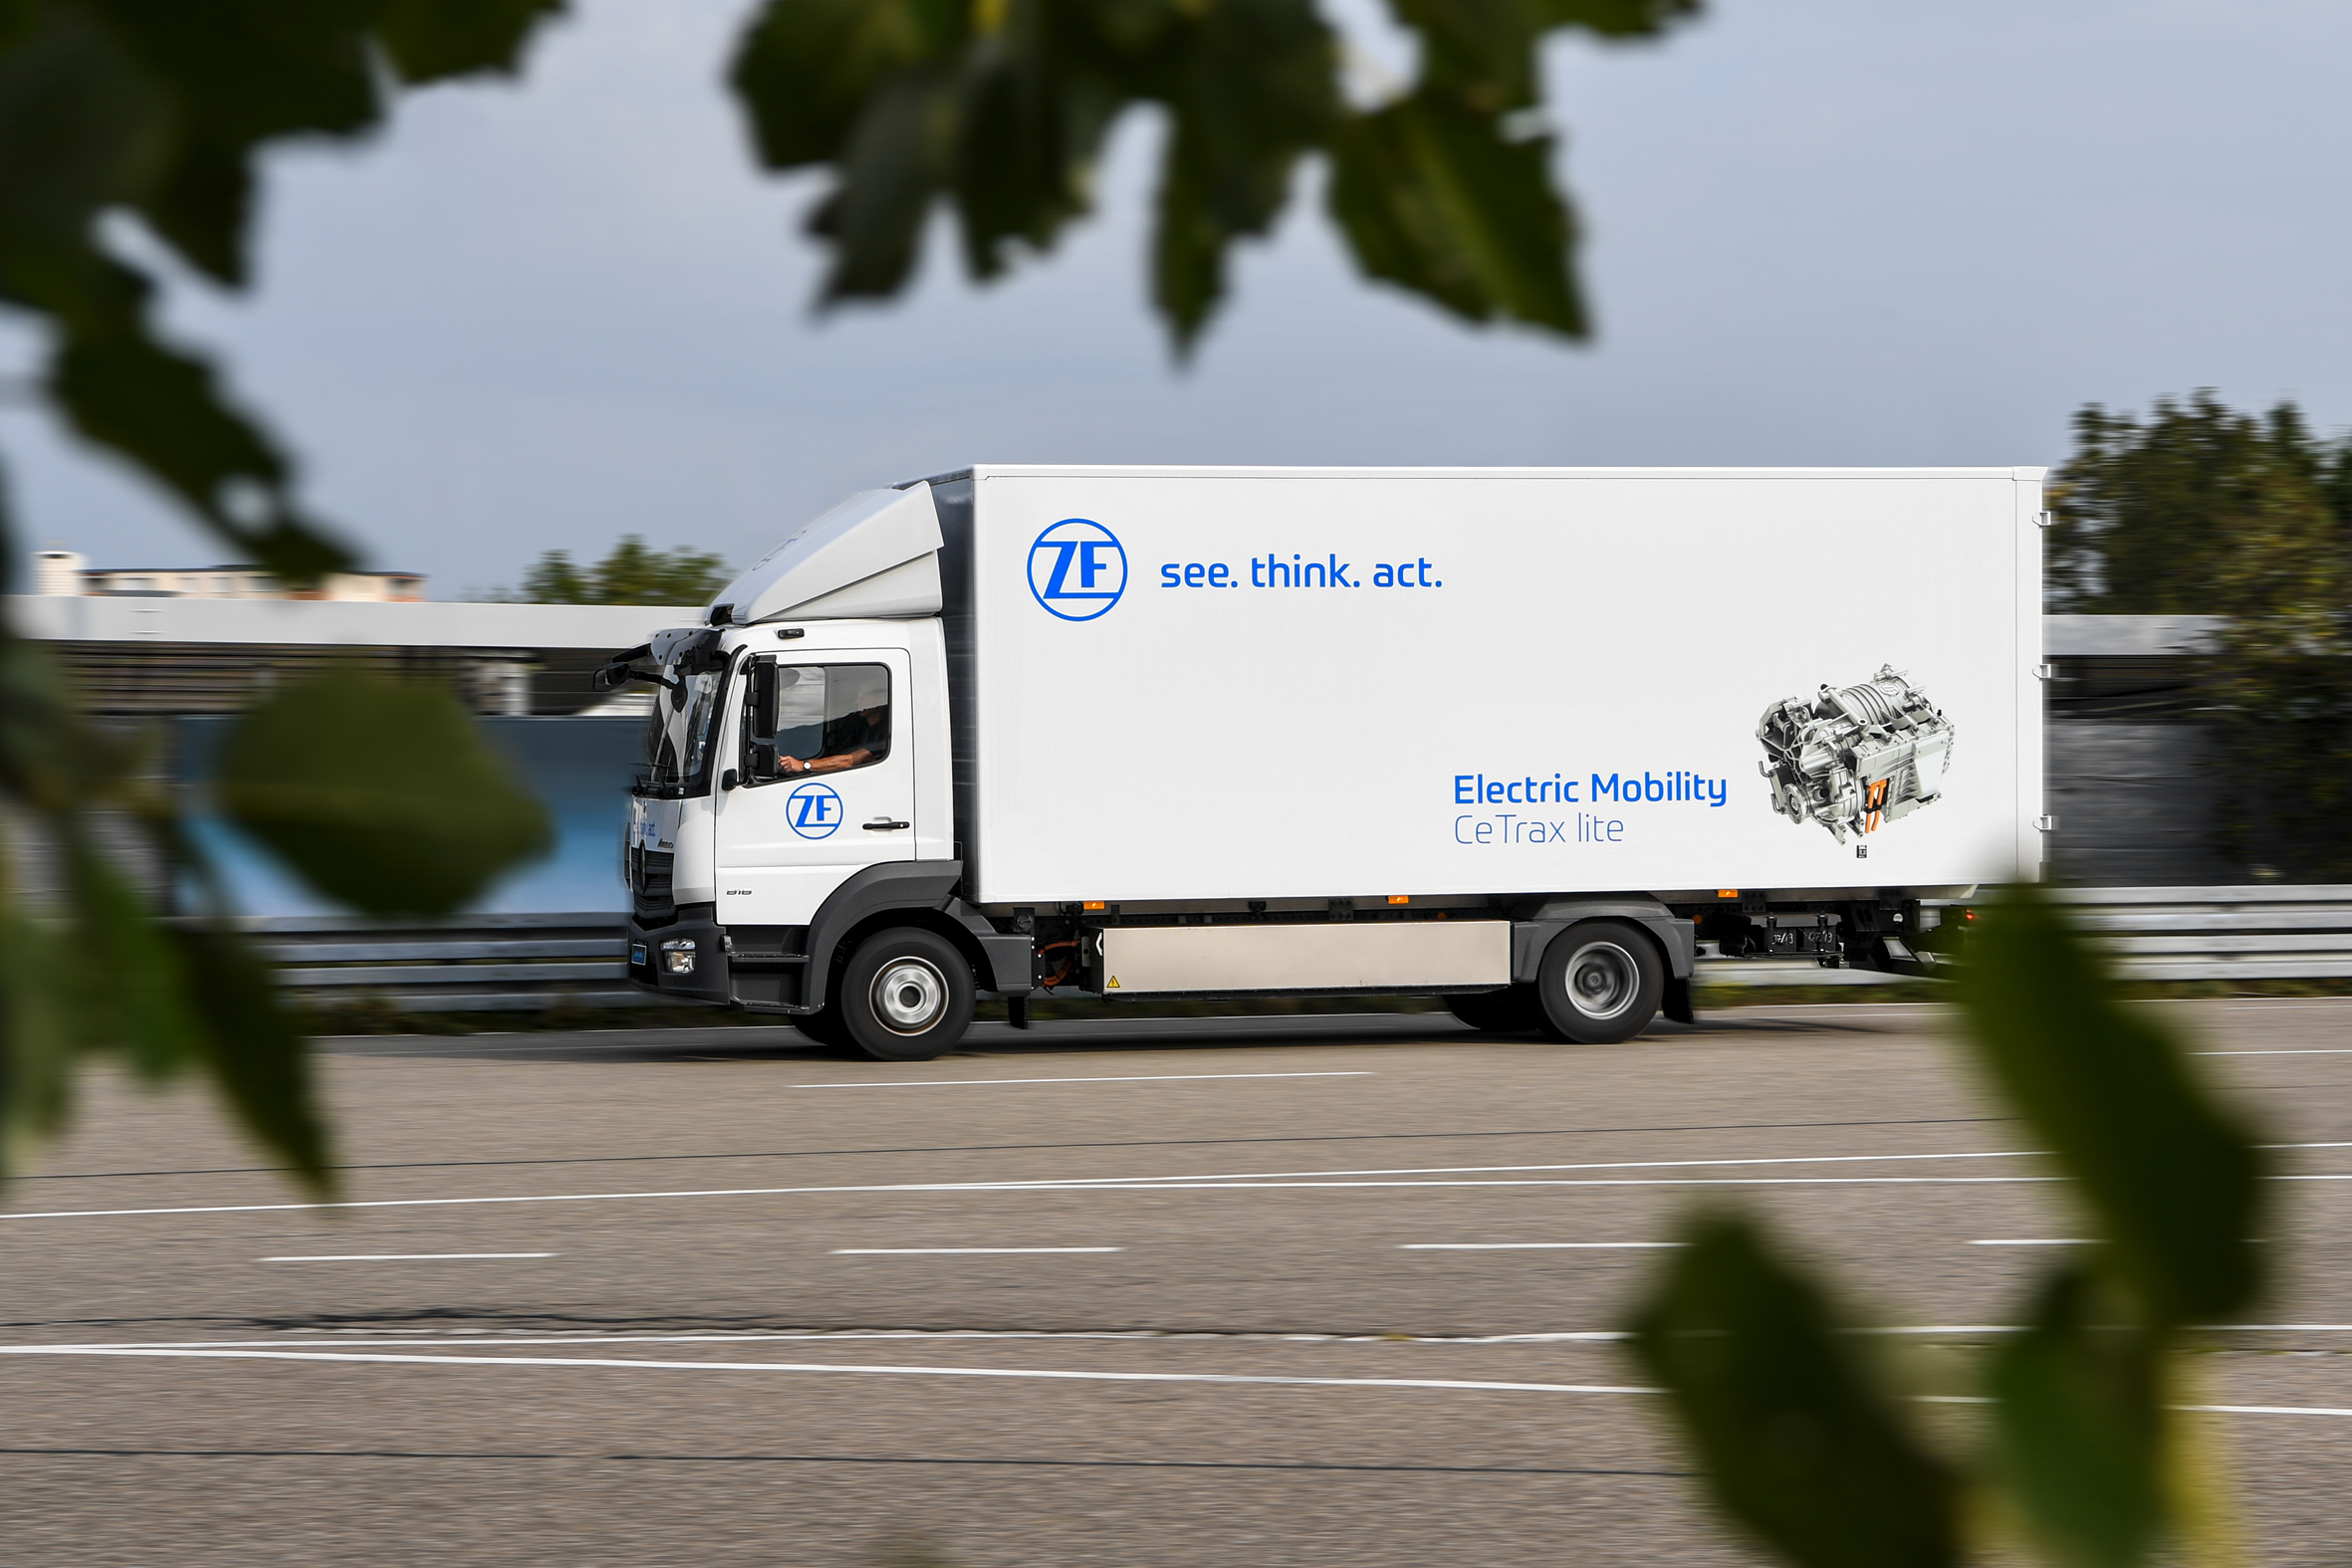 2-5_ZF_E-Mobility_CeTrax_lite_Truck